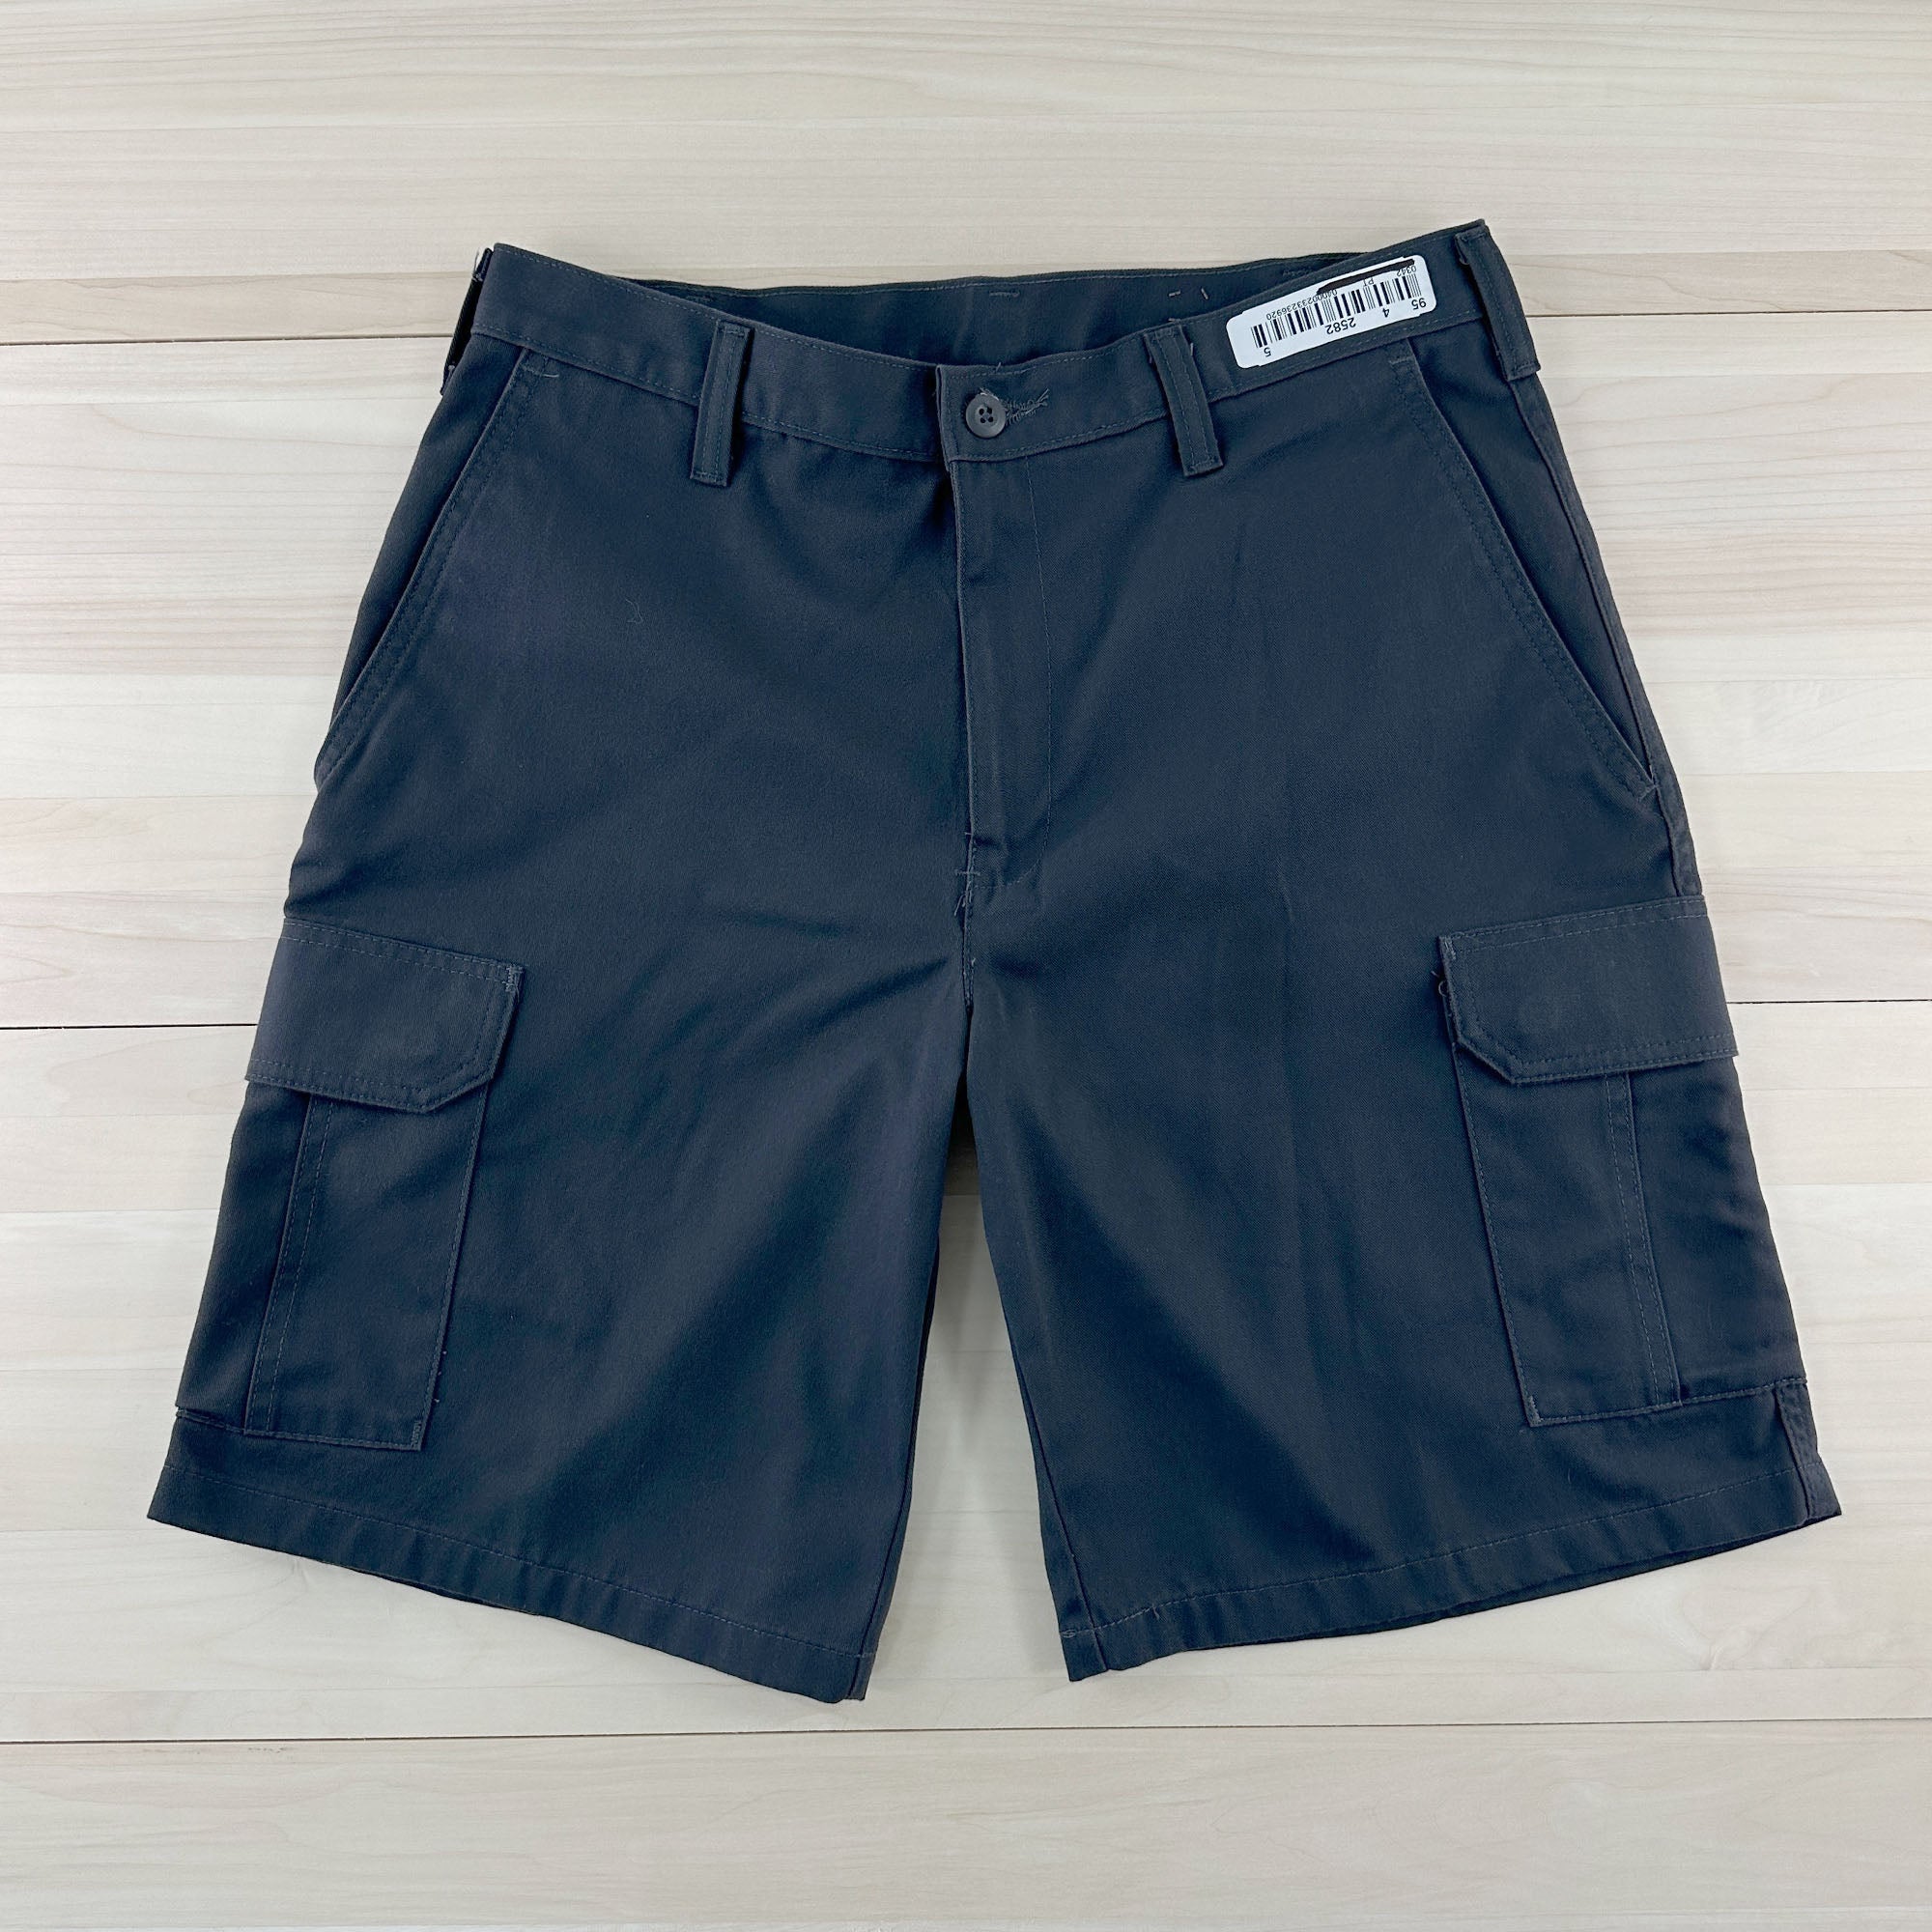 Men's Gray Cintas Comfortflex Work Cargo Shorts - 33